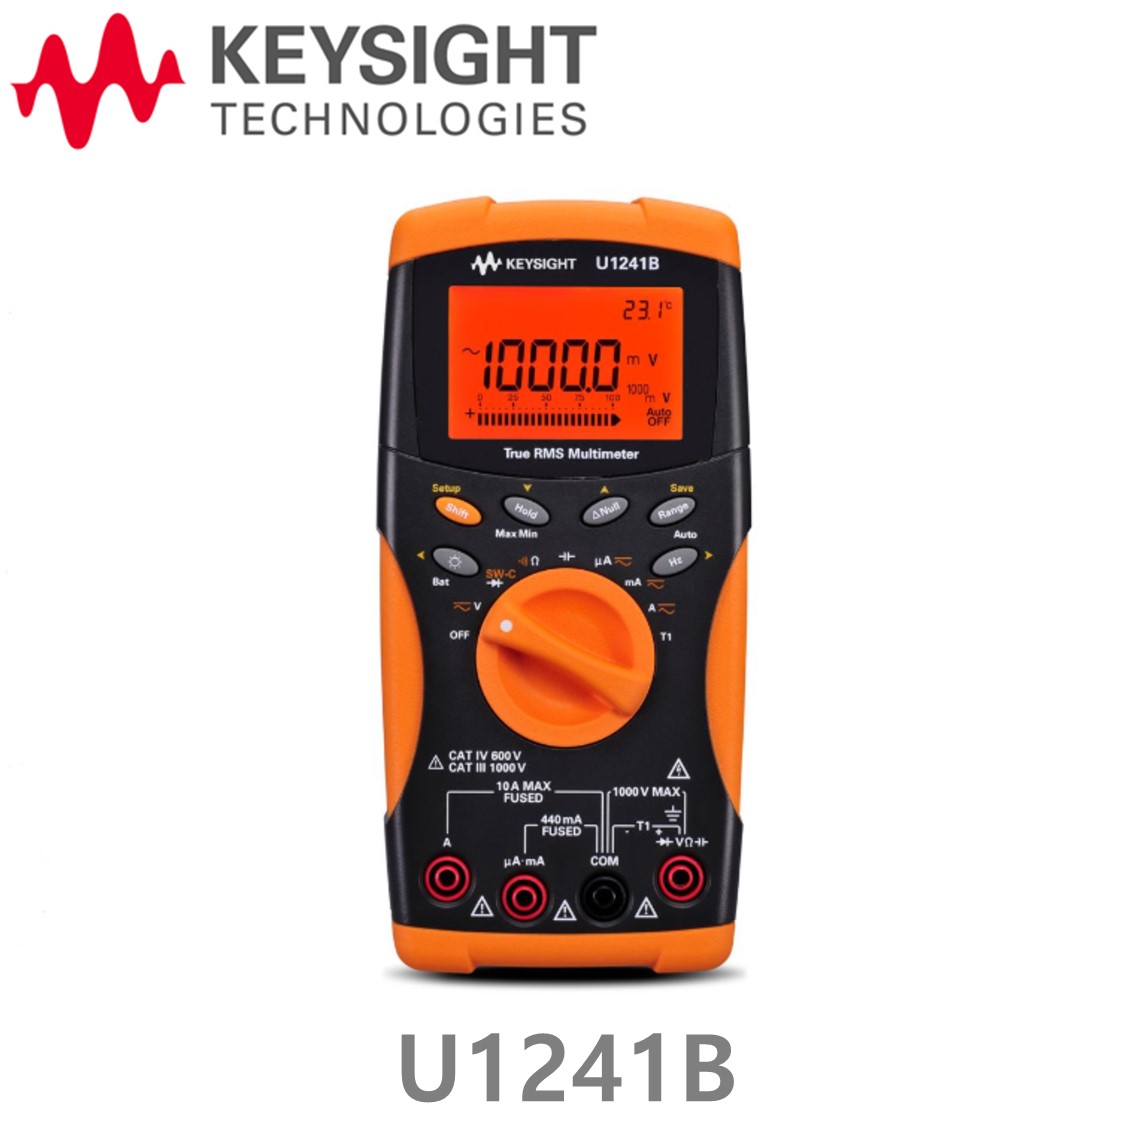 [ KEYSIGHT U1241B ] 4디지트 핸드형 디지털 멀티미터